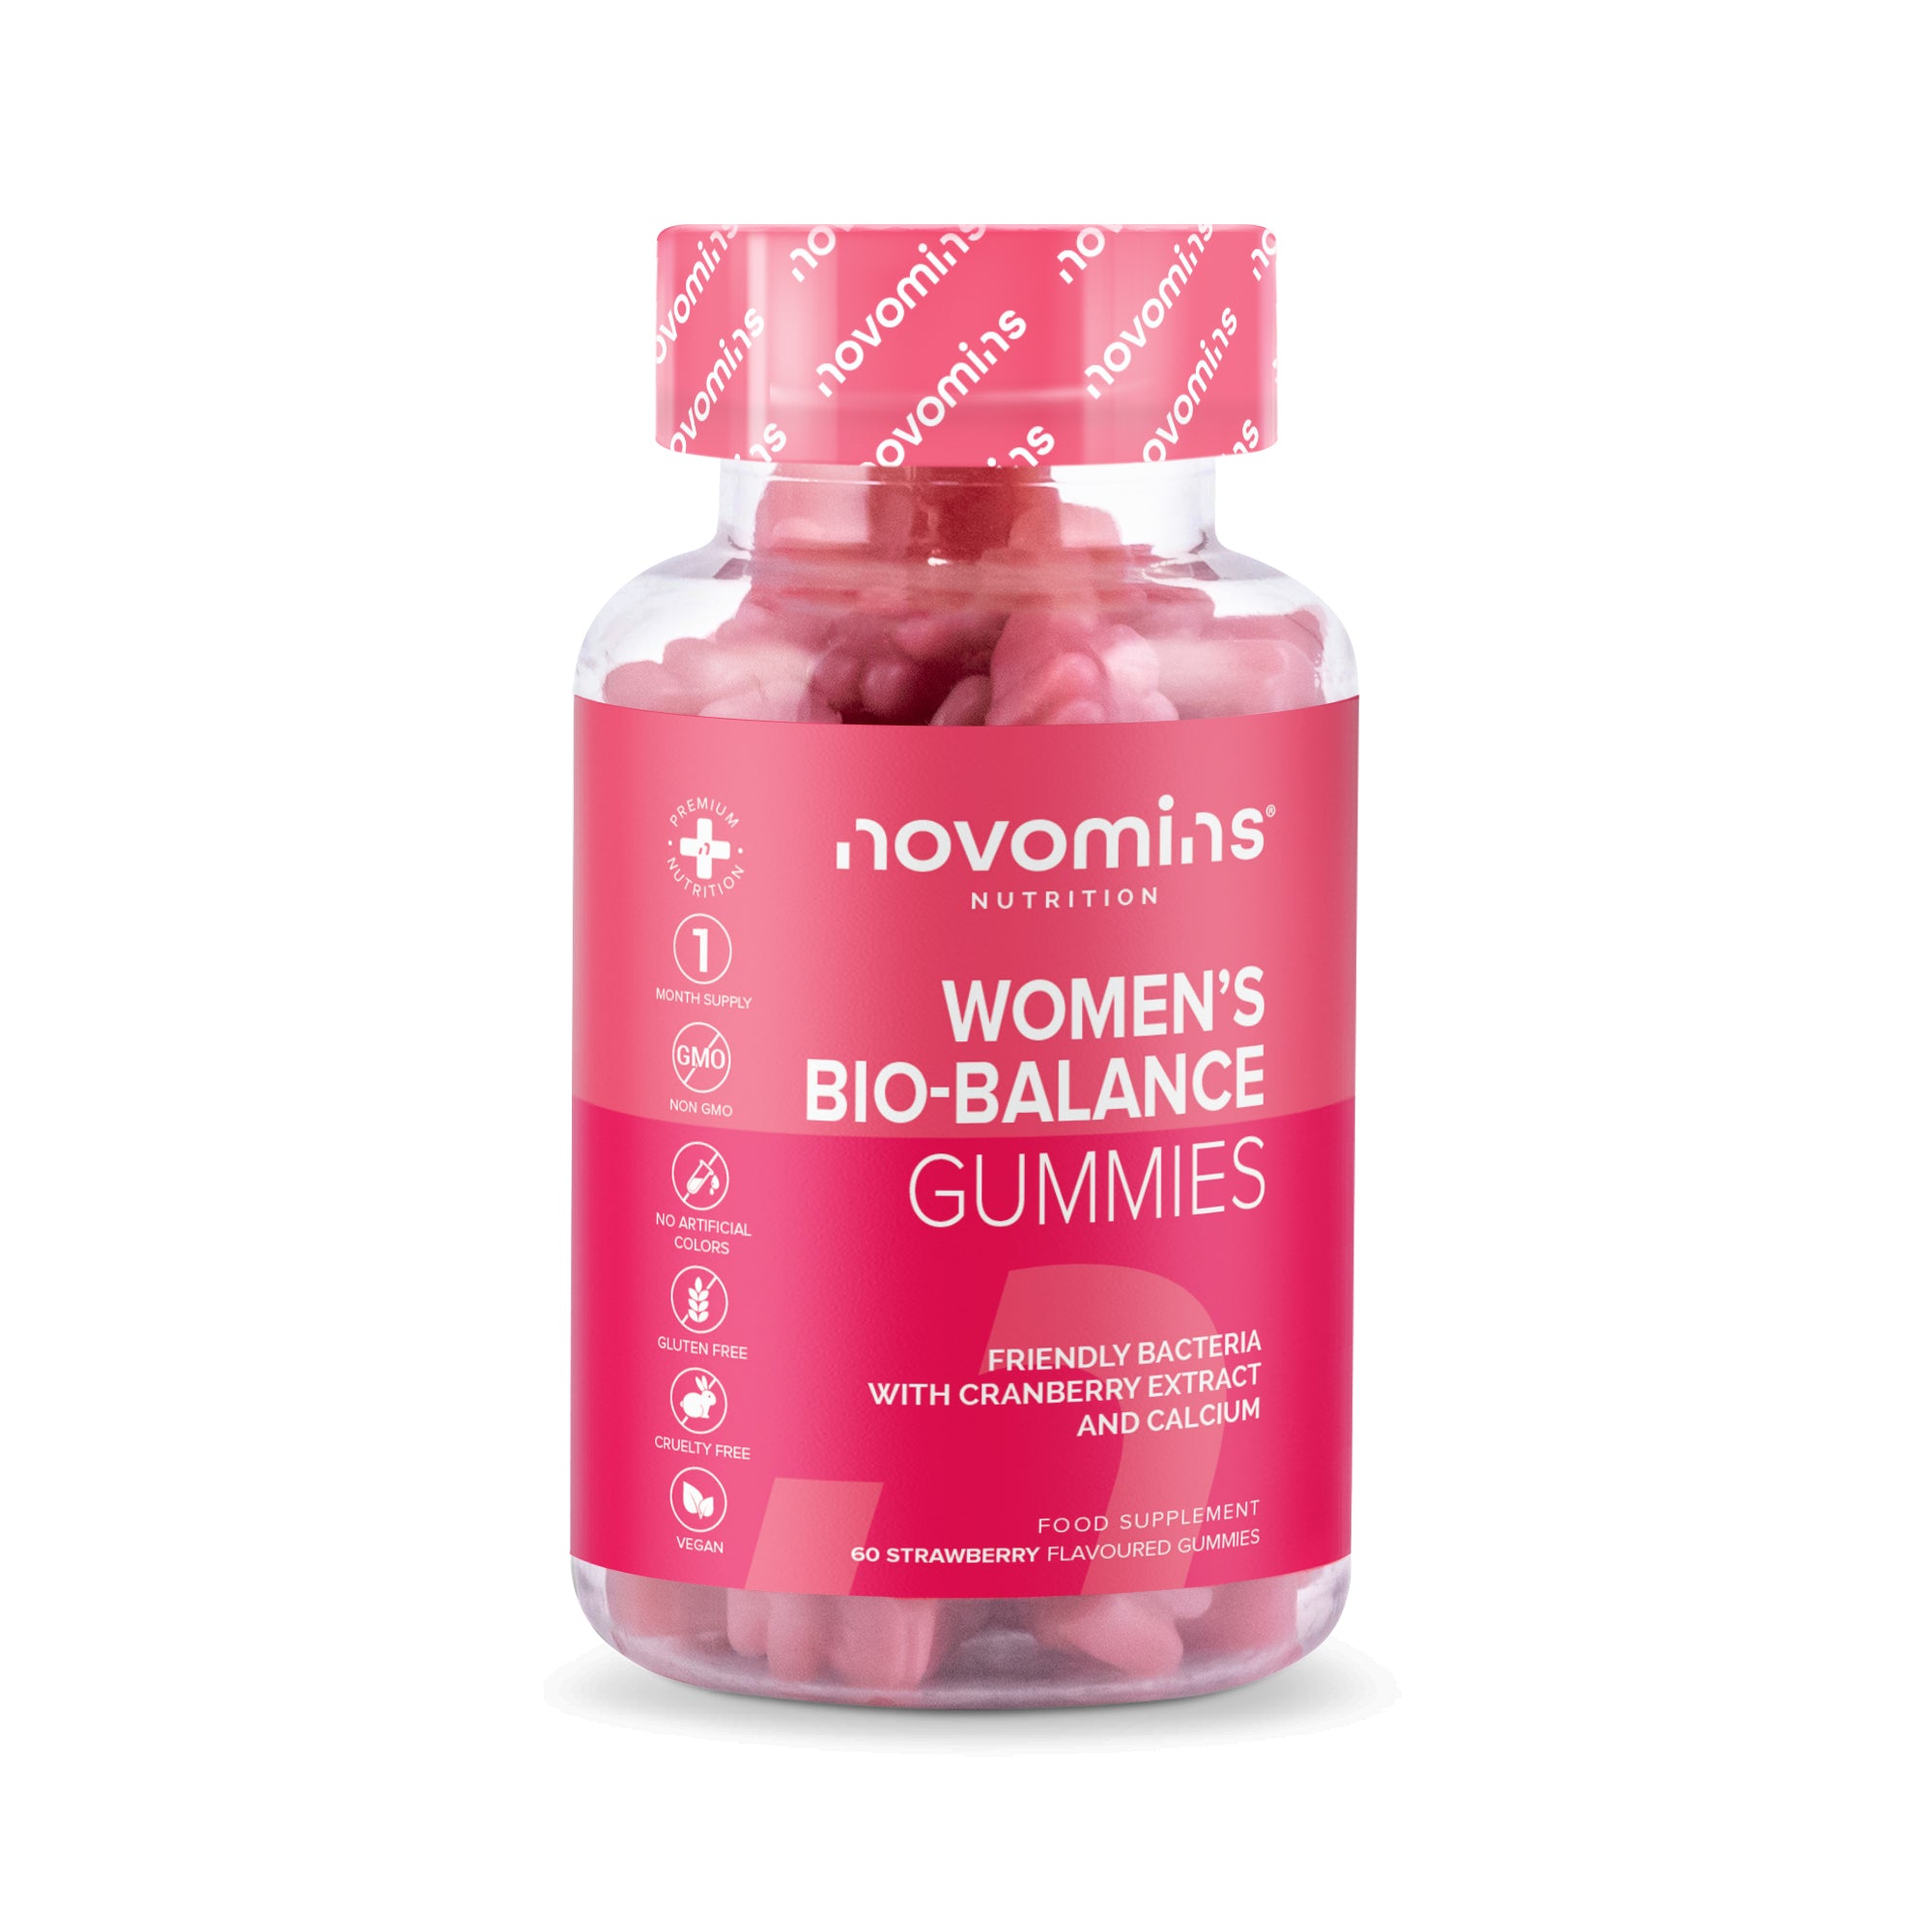 Women's Bio-Balance Gummies